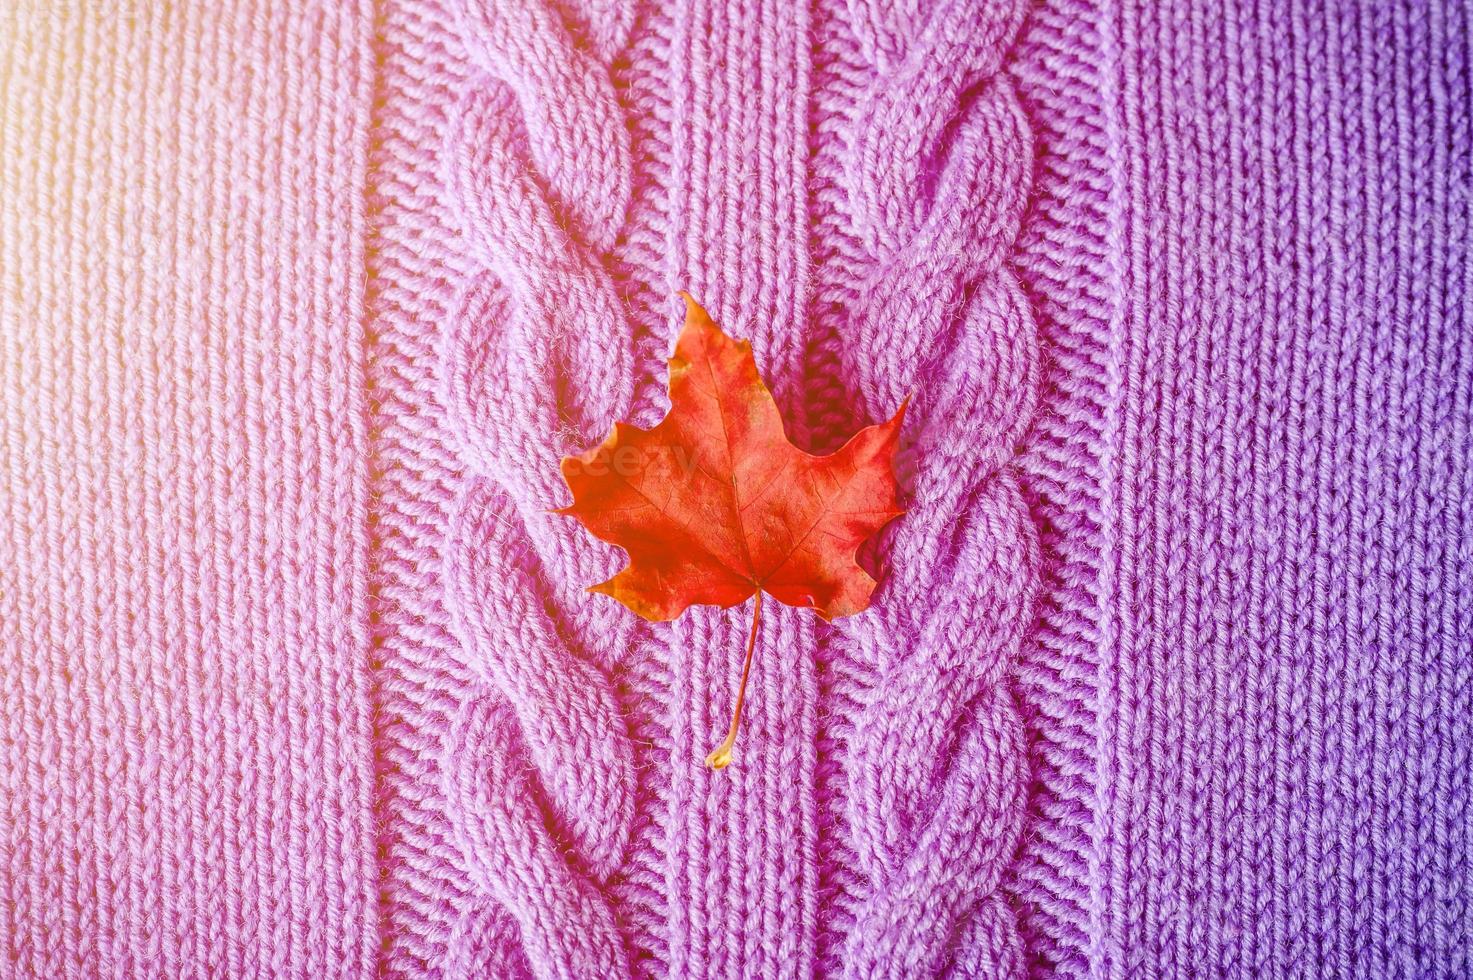 klein felrood droog herfstesdoornblad op paarse gebreide textuurstof of trui met staartjes foto